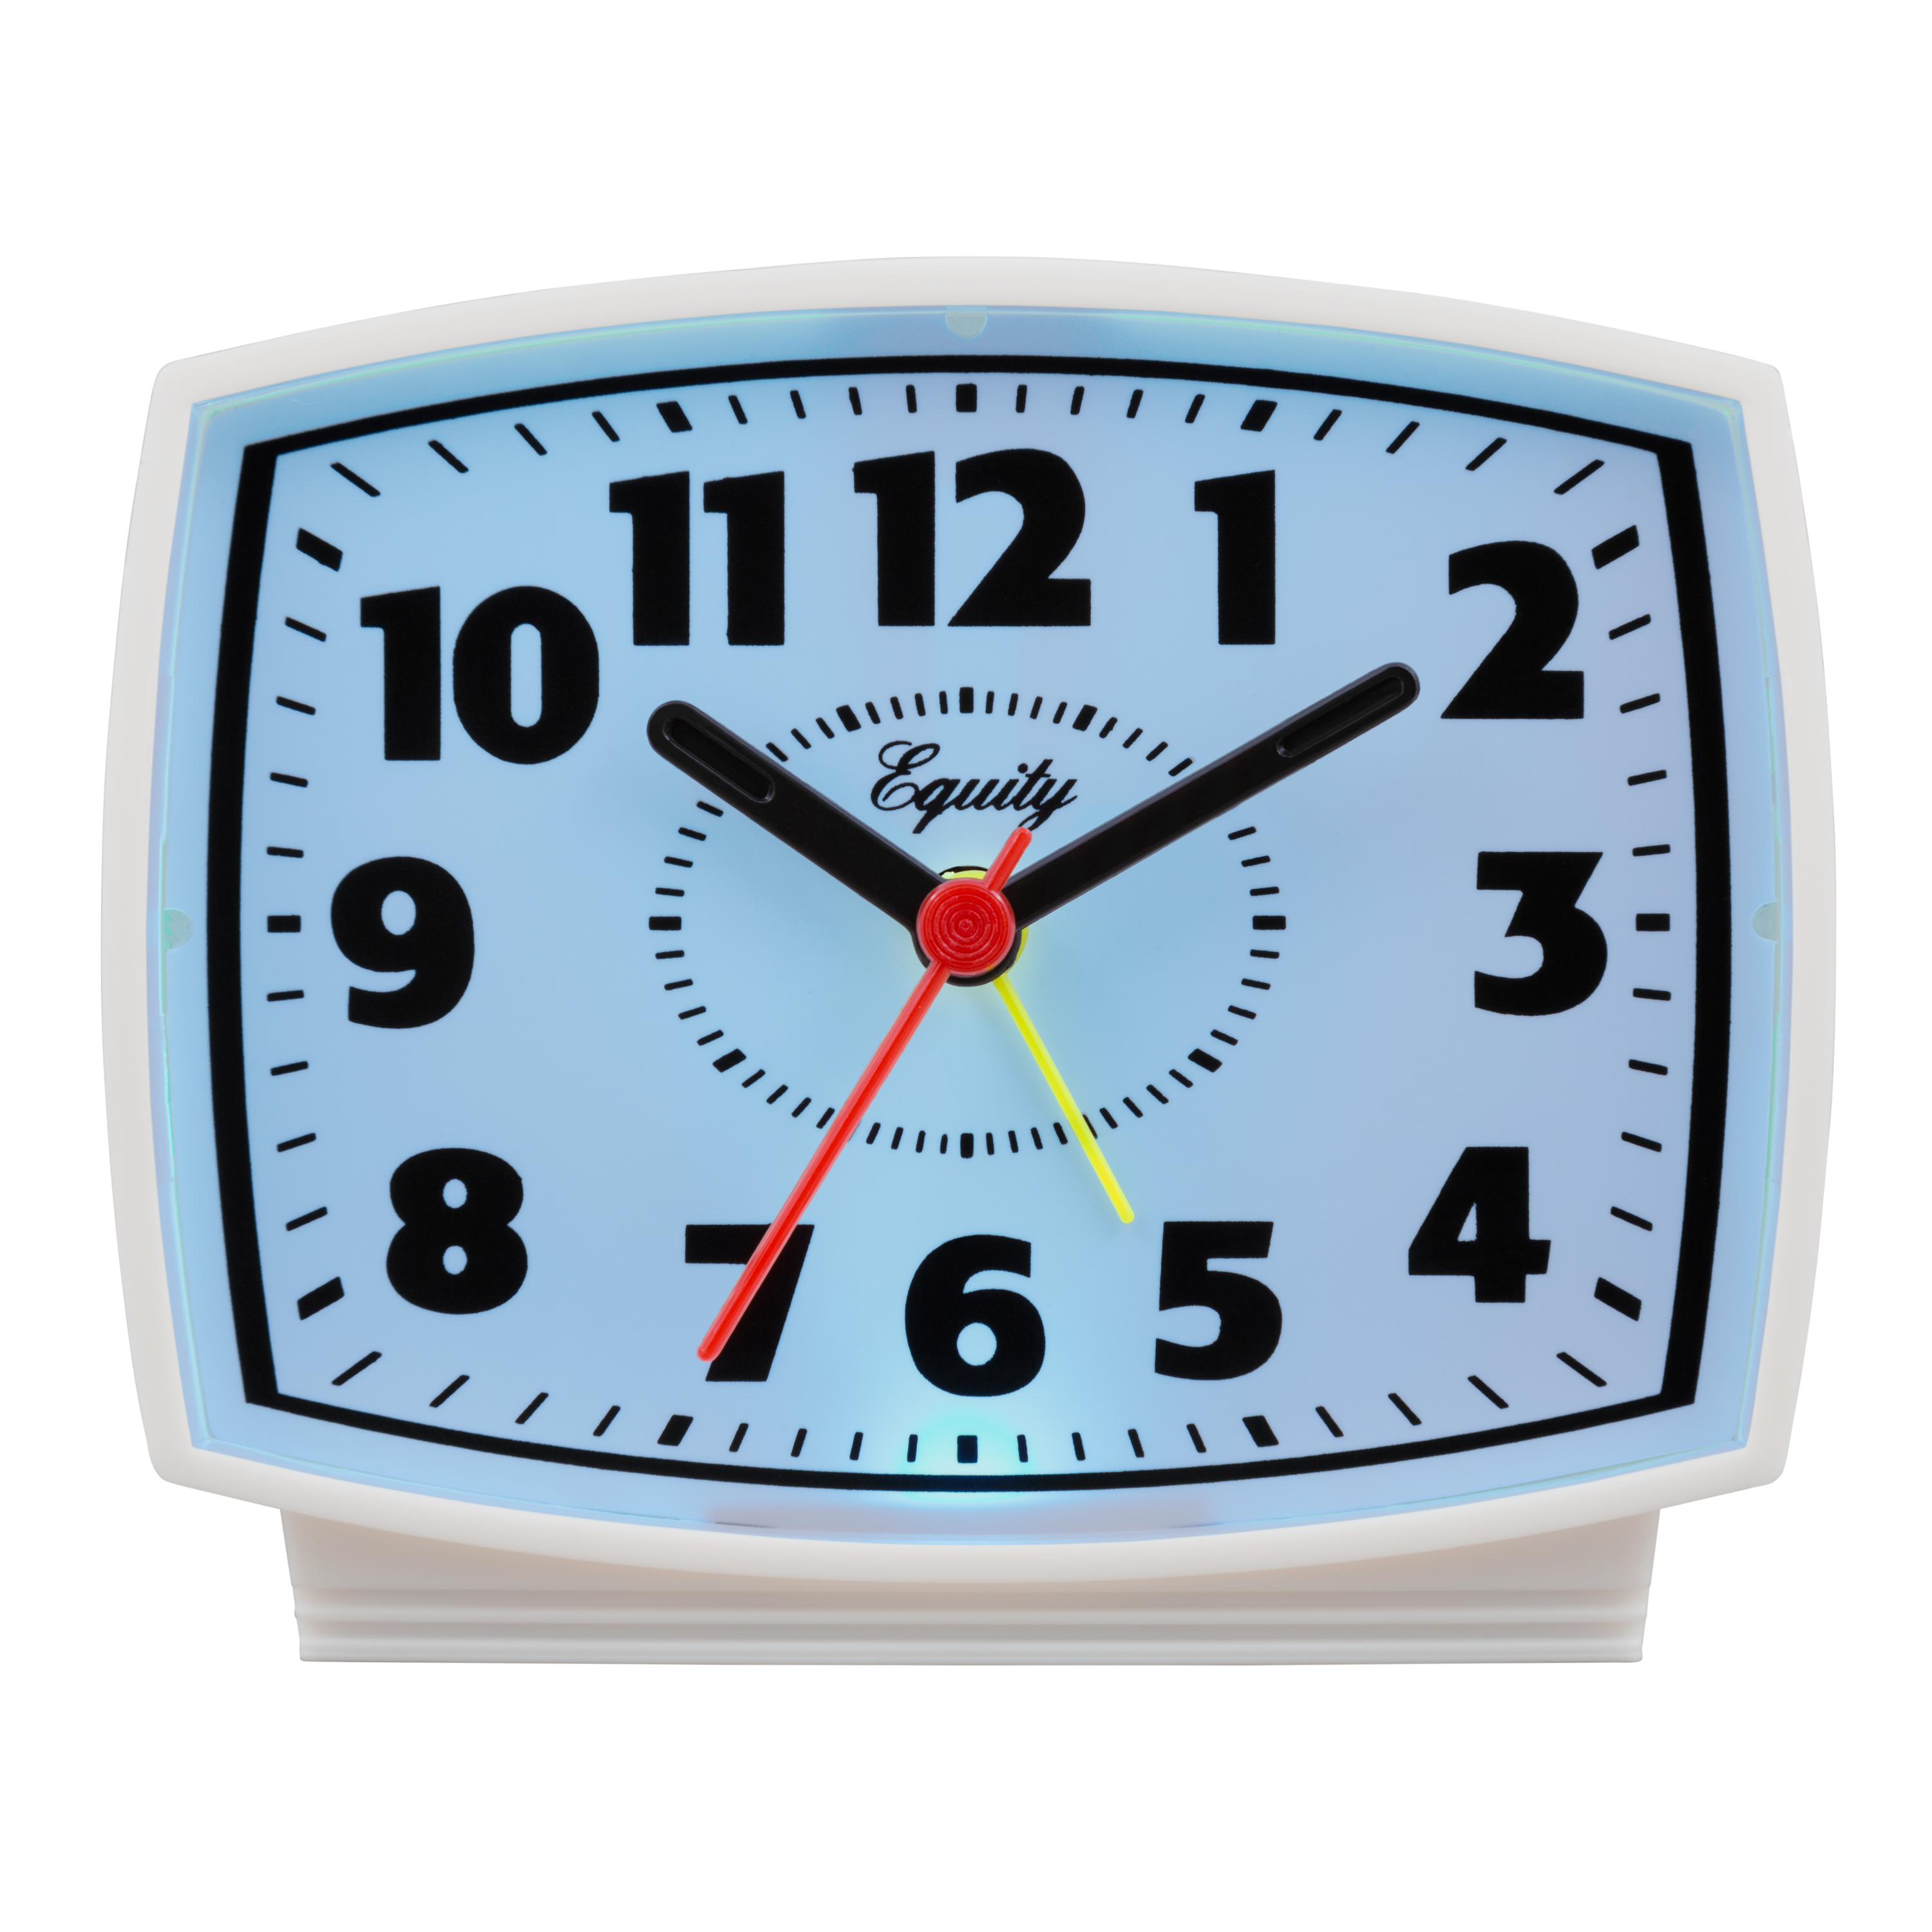 Equity by La Crosse 33100 Electric Analog Alarm Clock - image 3 of 7